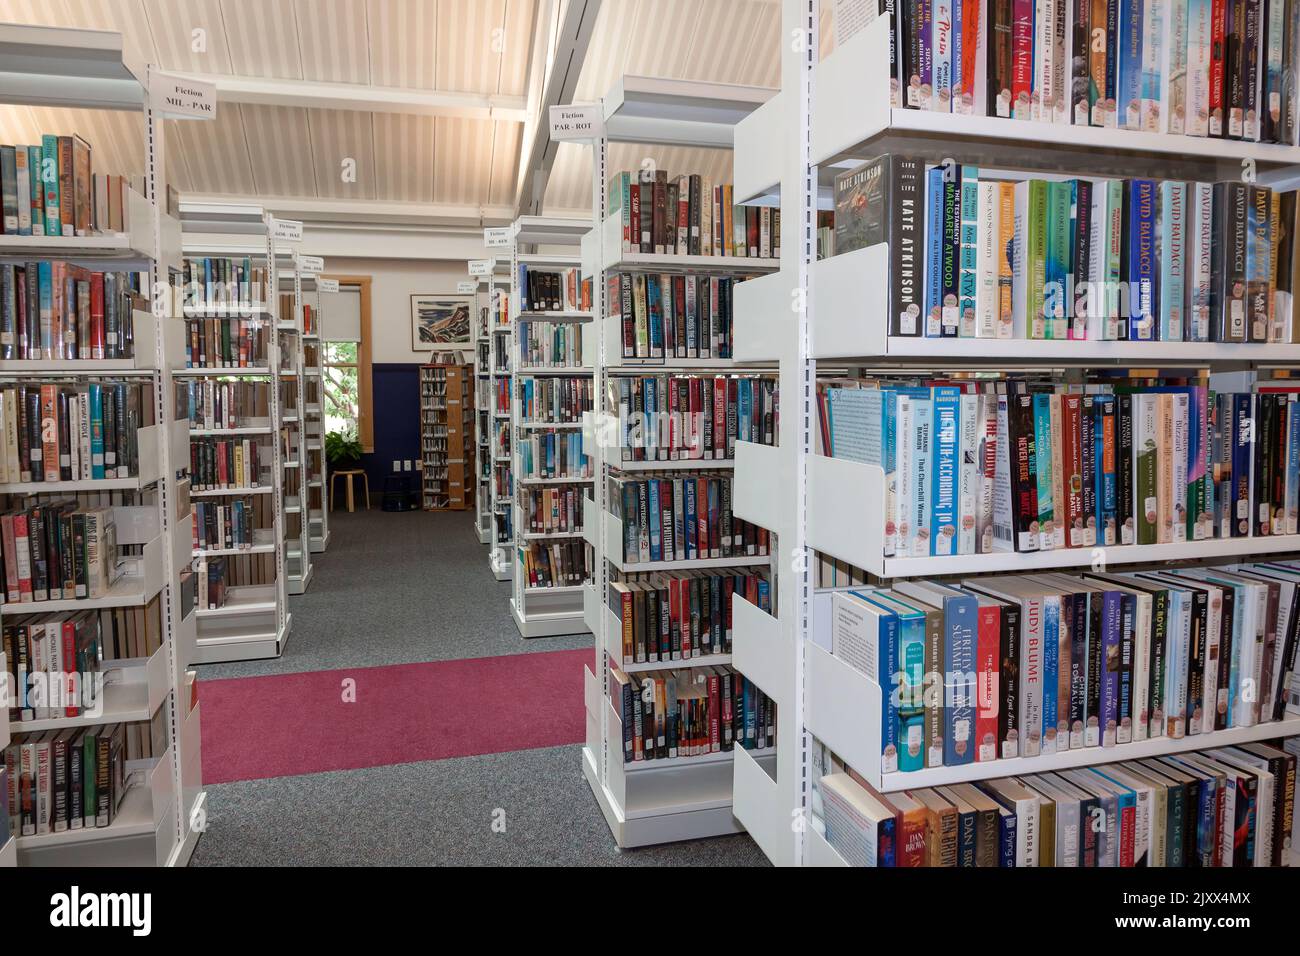 Bookshelves/stacks in the Truro Public Library, Truro, Massachusetts, Cape Cod,United States. Stock Photo